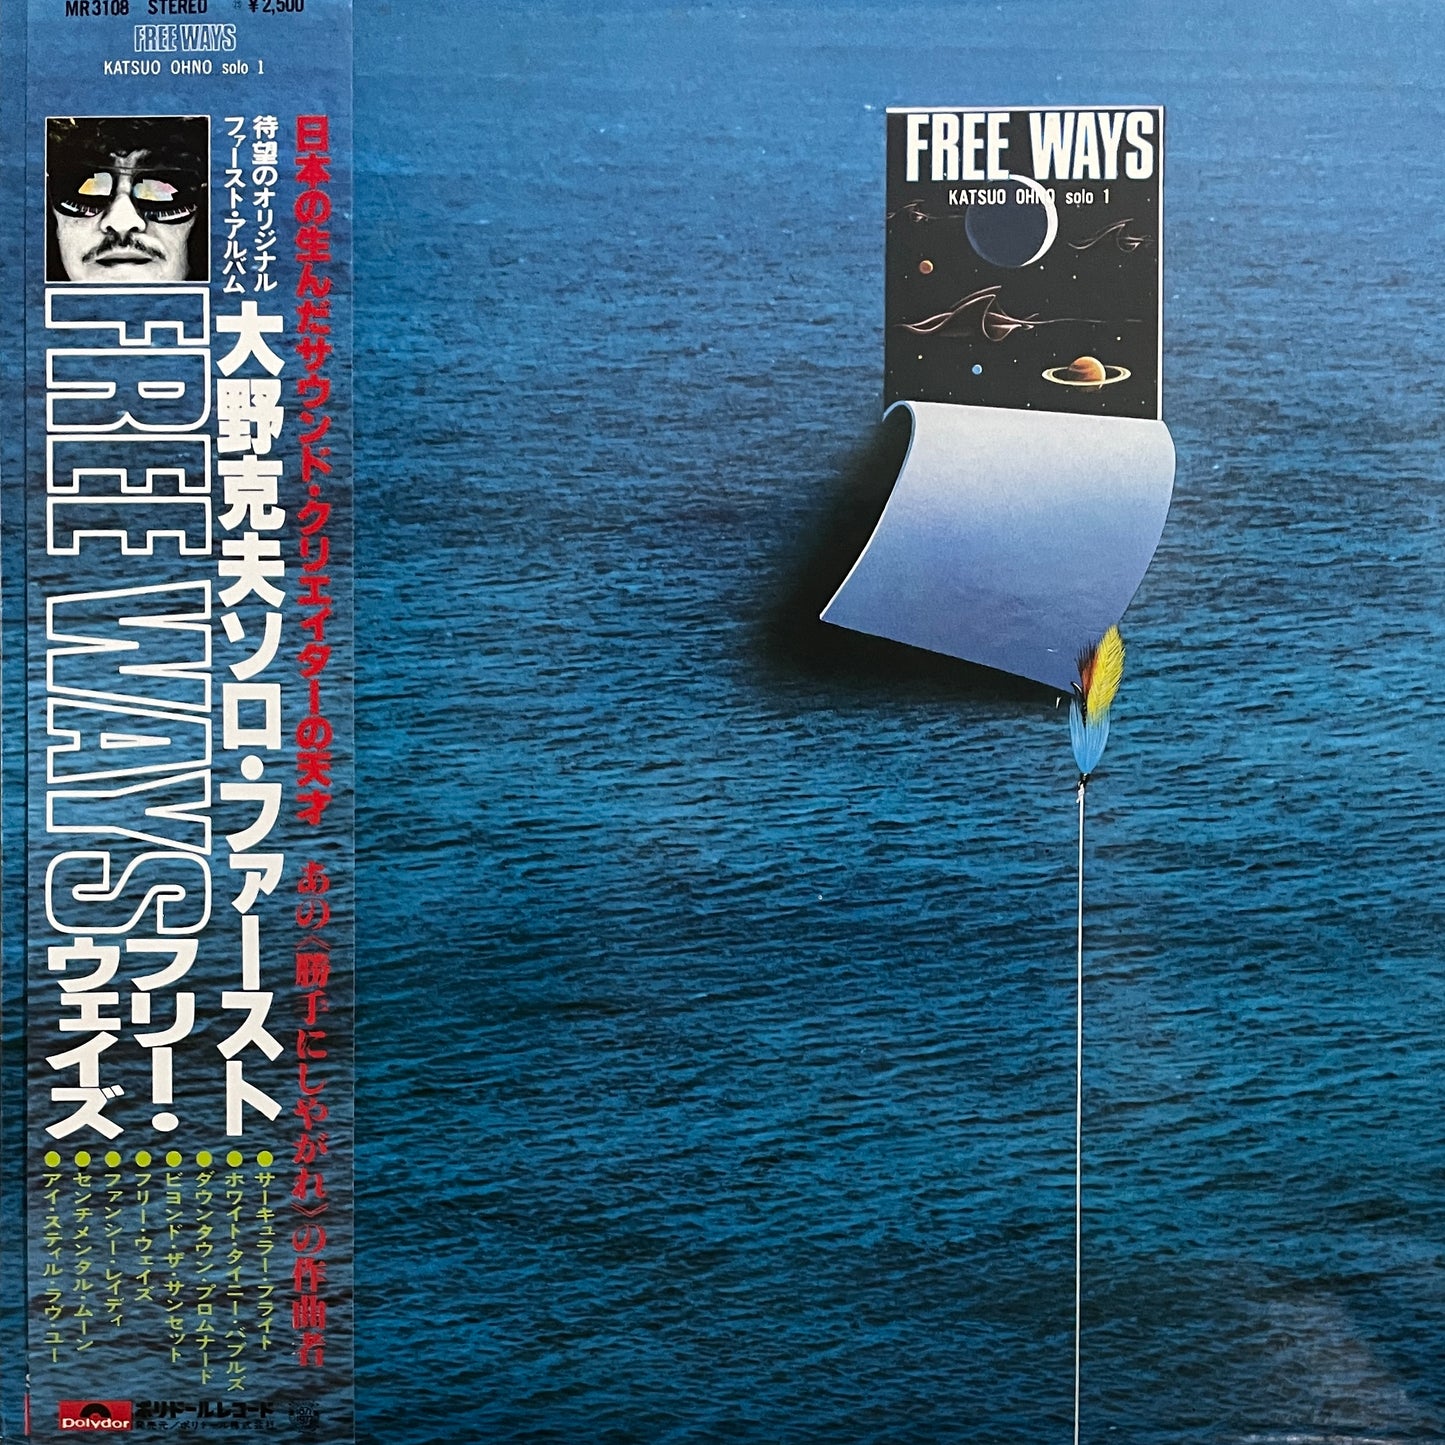 Katsuo Ohno "Free Ways" (1978)